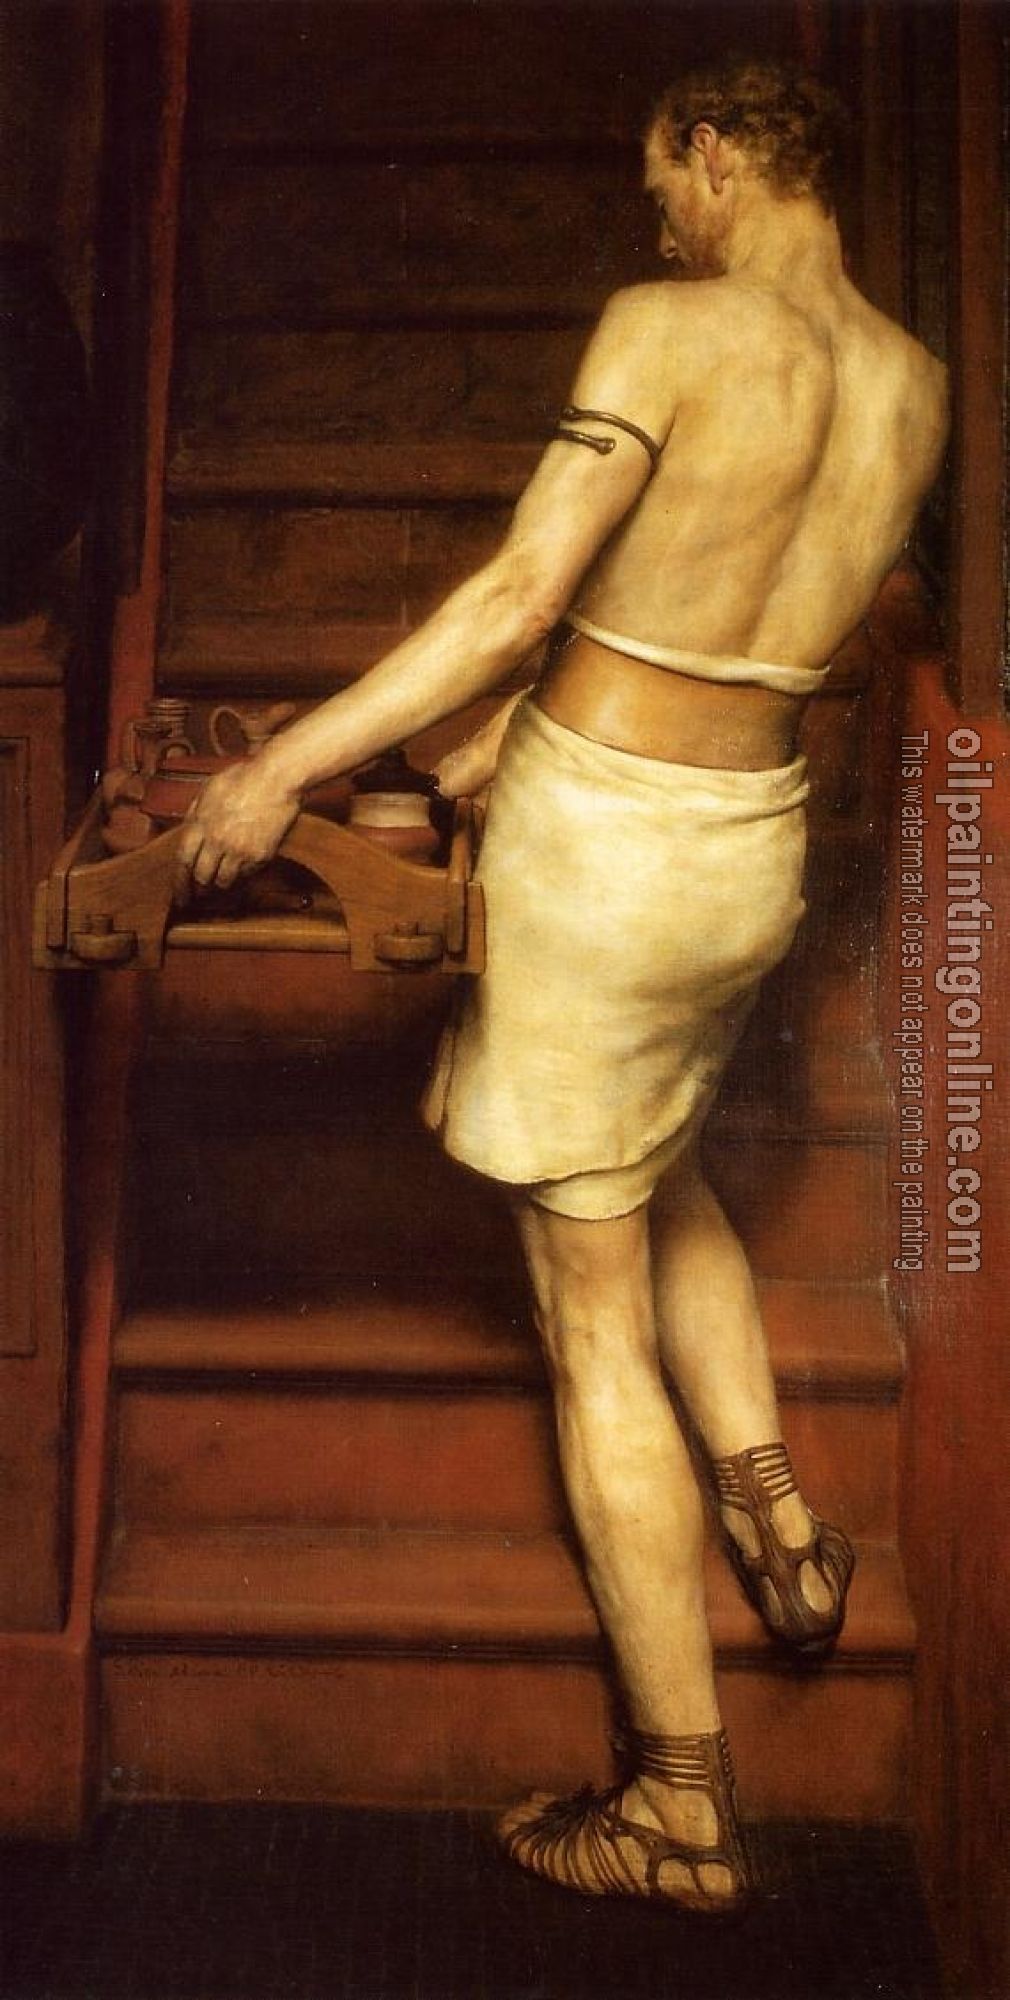 Alma-Tadema, Sir Lawrence - The Roman Potter